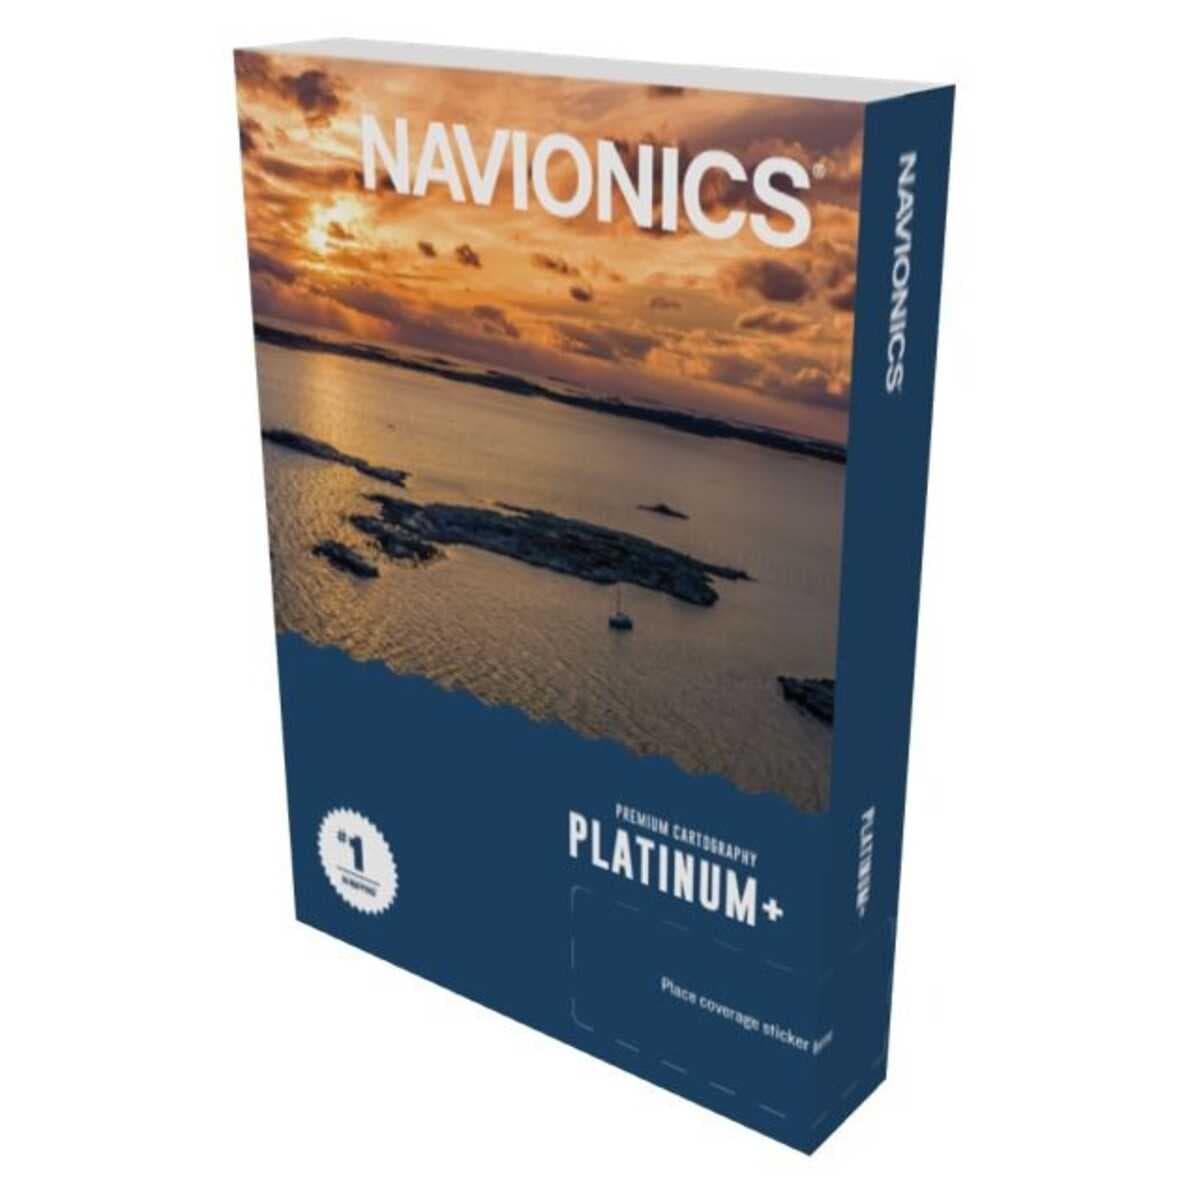 Navionics Plat+ REG:Alpine, lakes/rivers